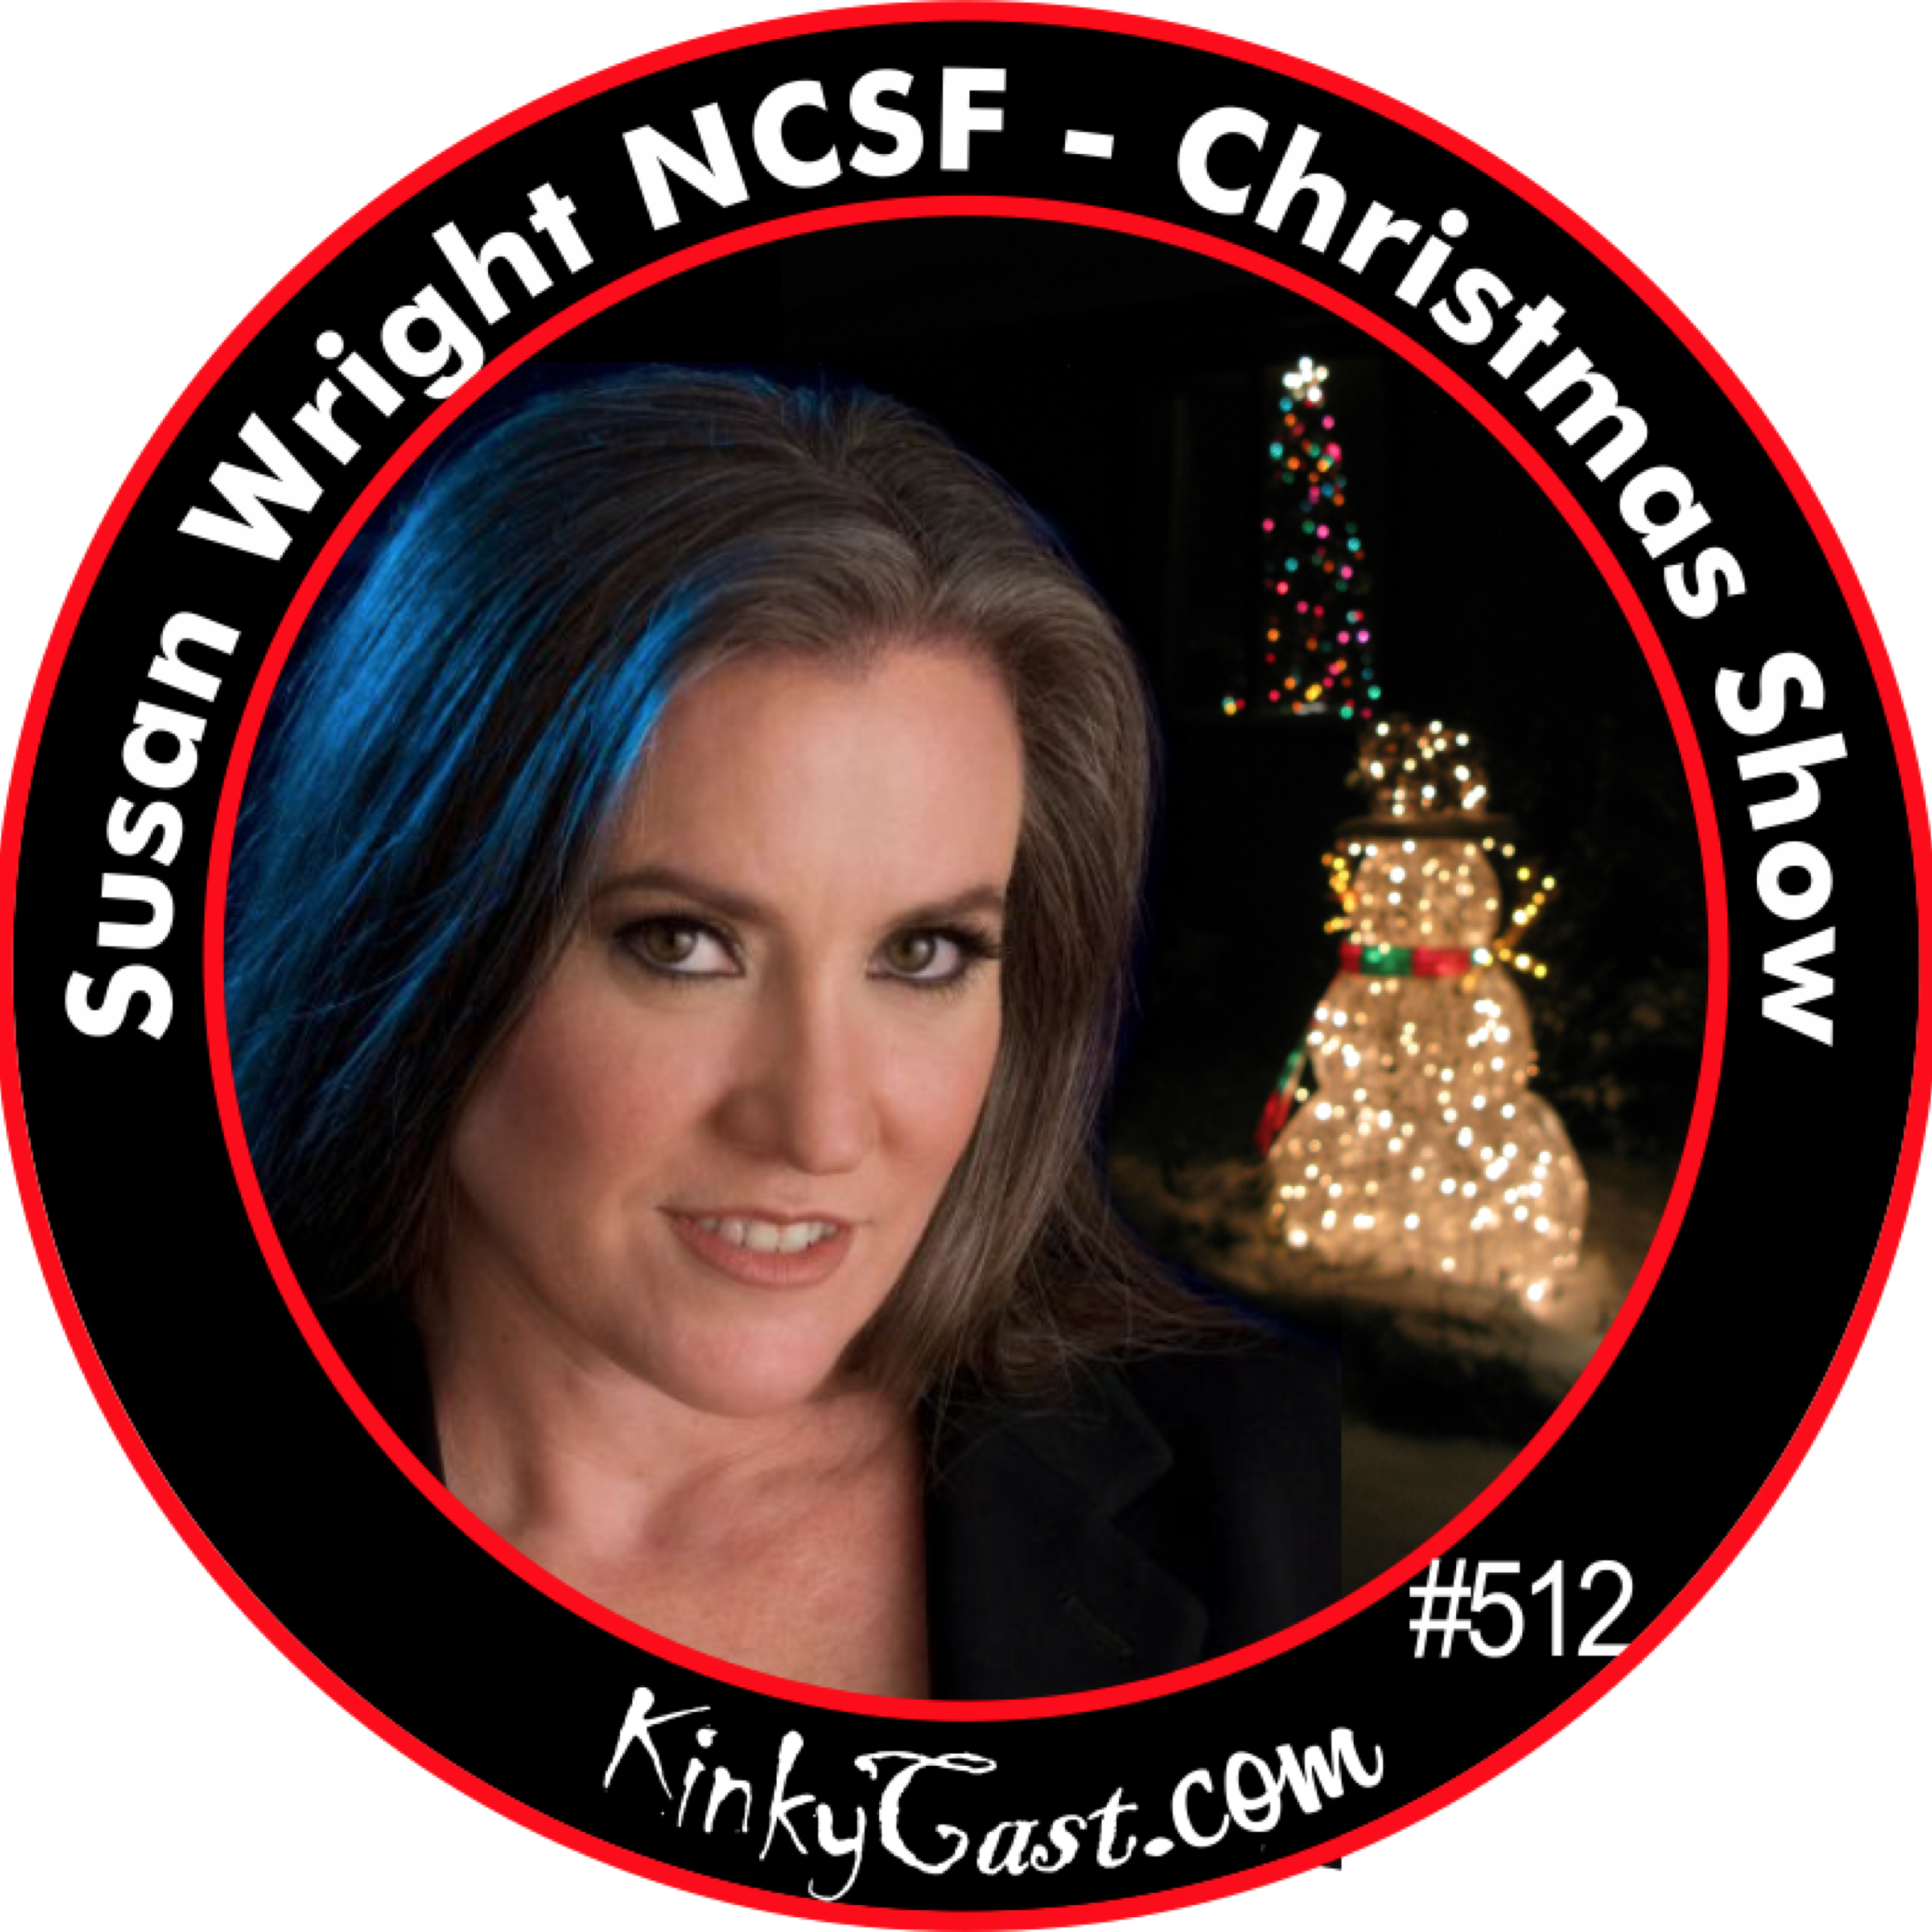 #512 - Susan Wright NCSF - Christmas Show